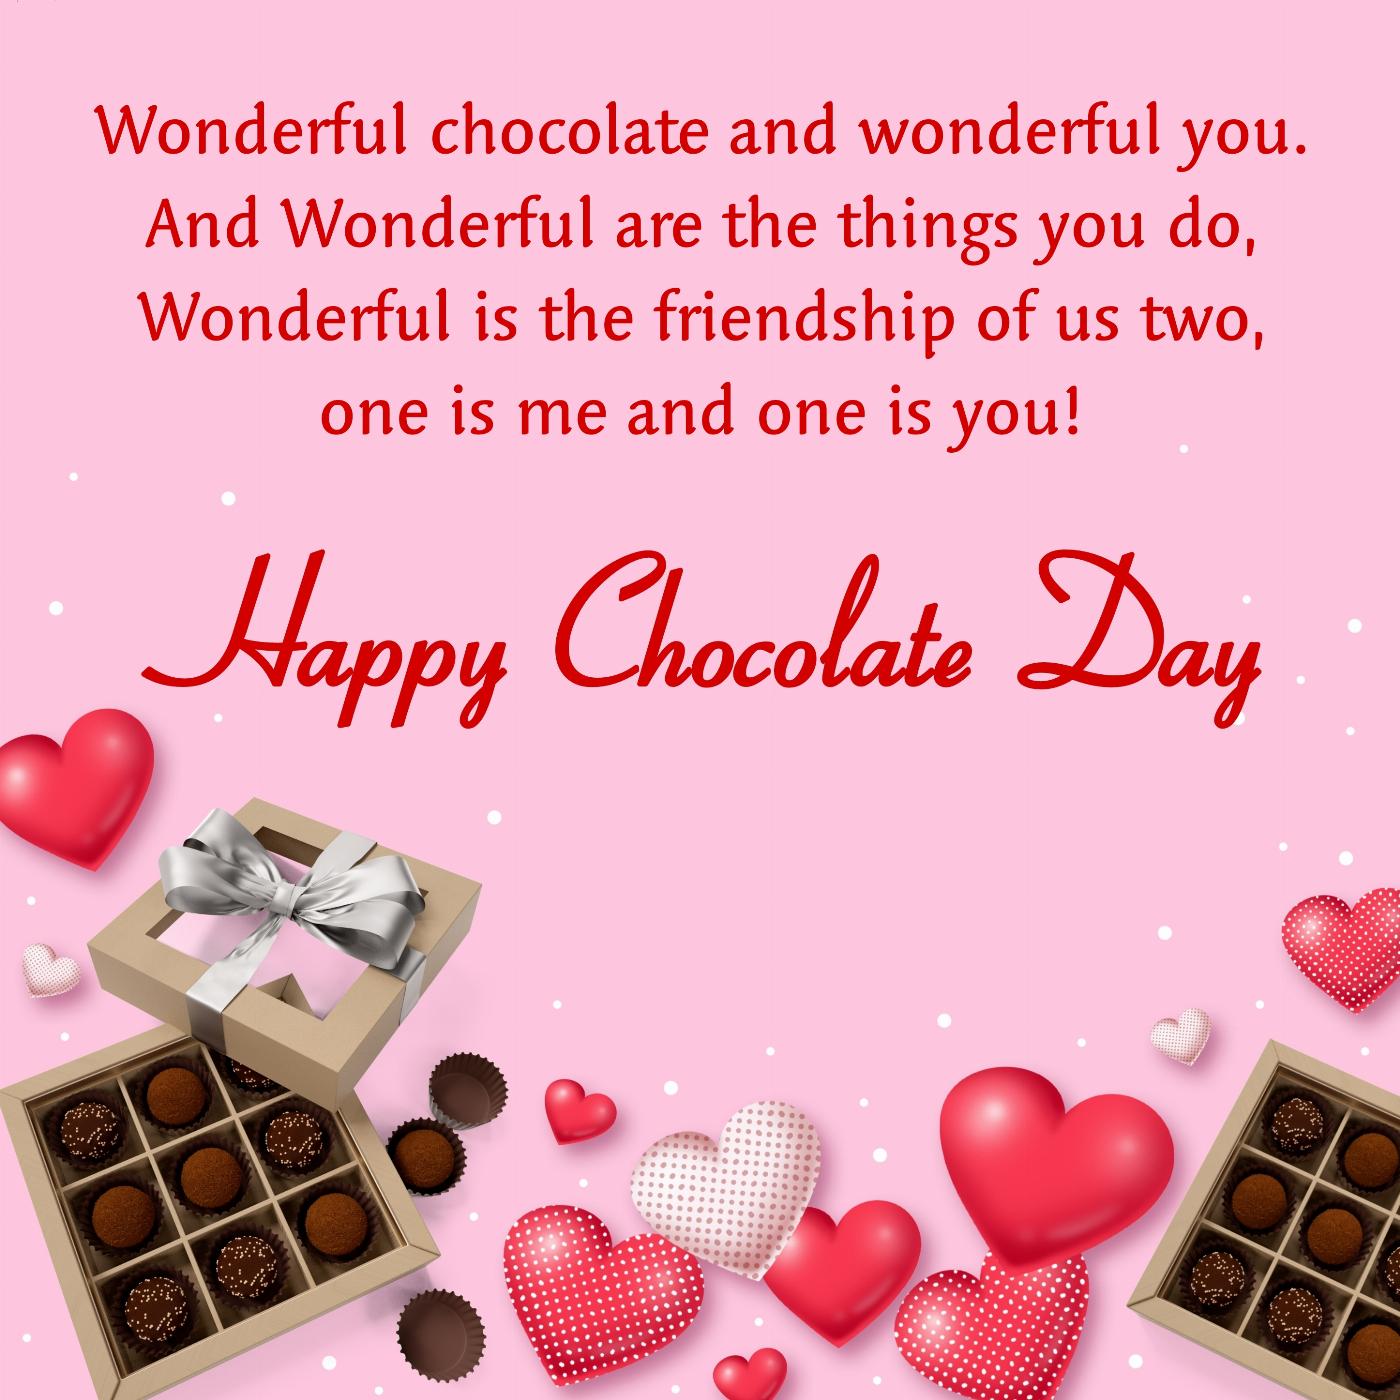 Wonderful chocolate and wonderful you